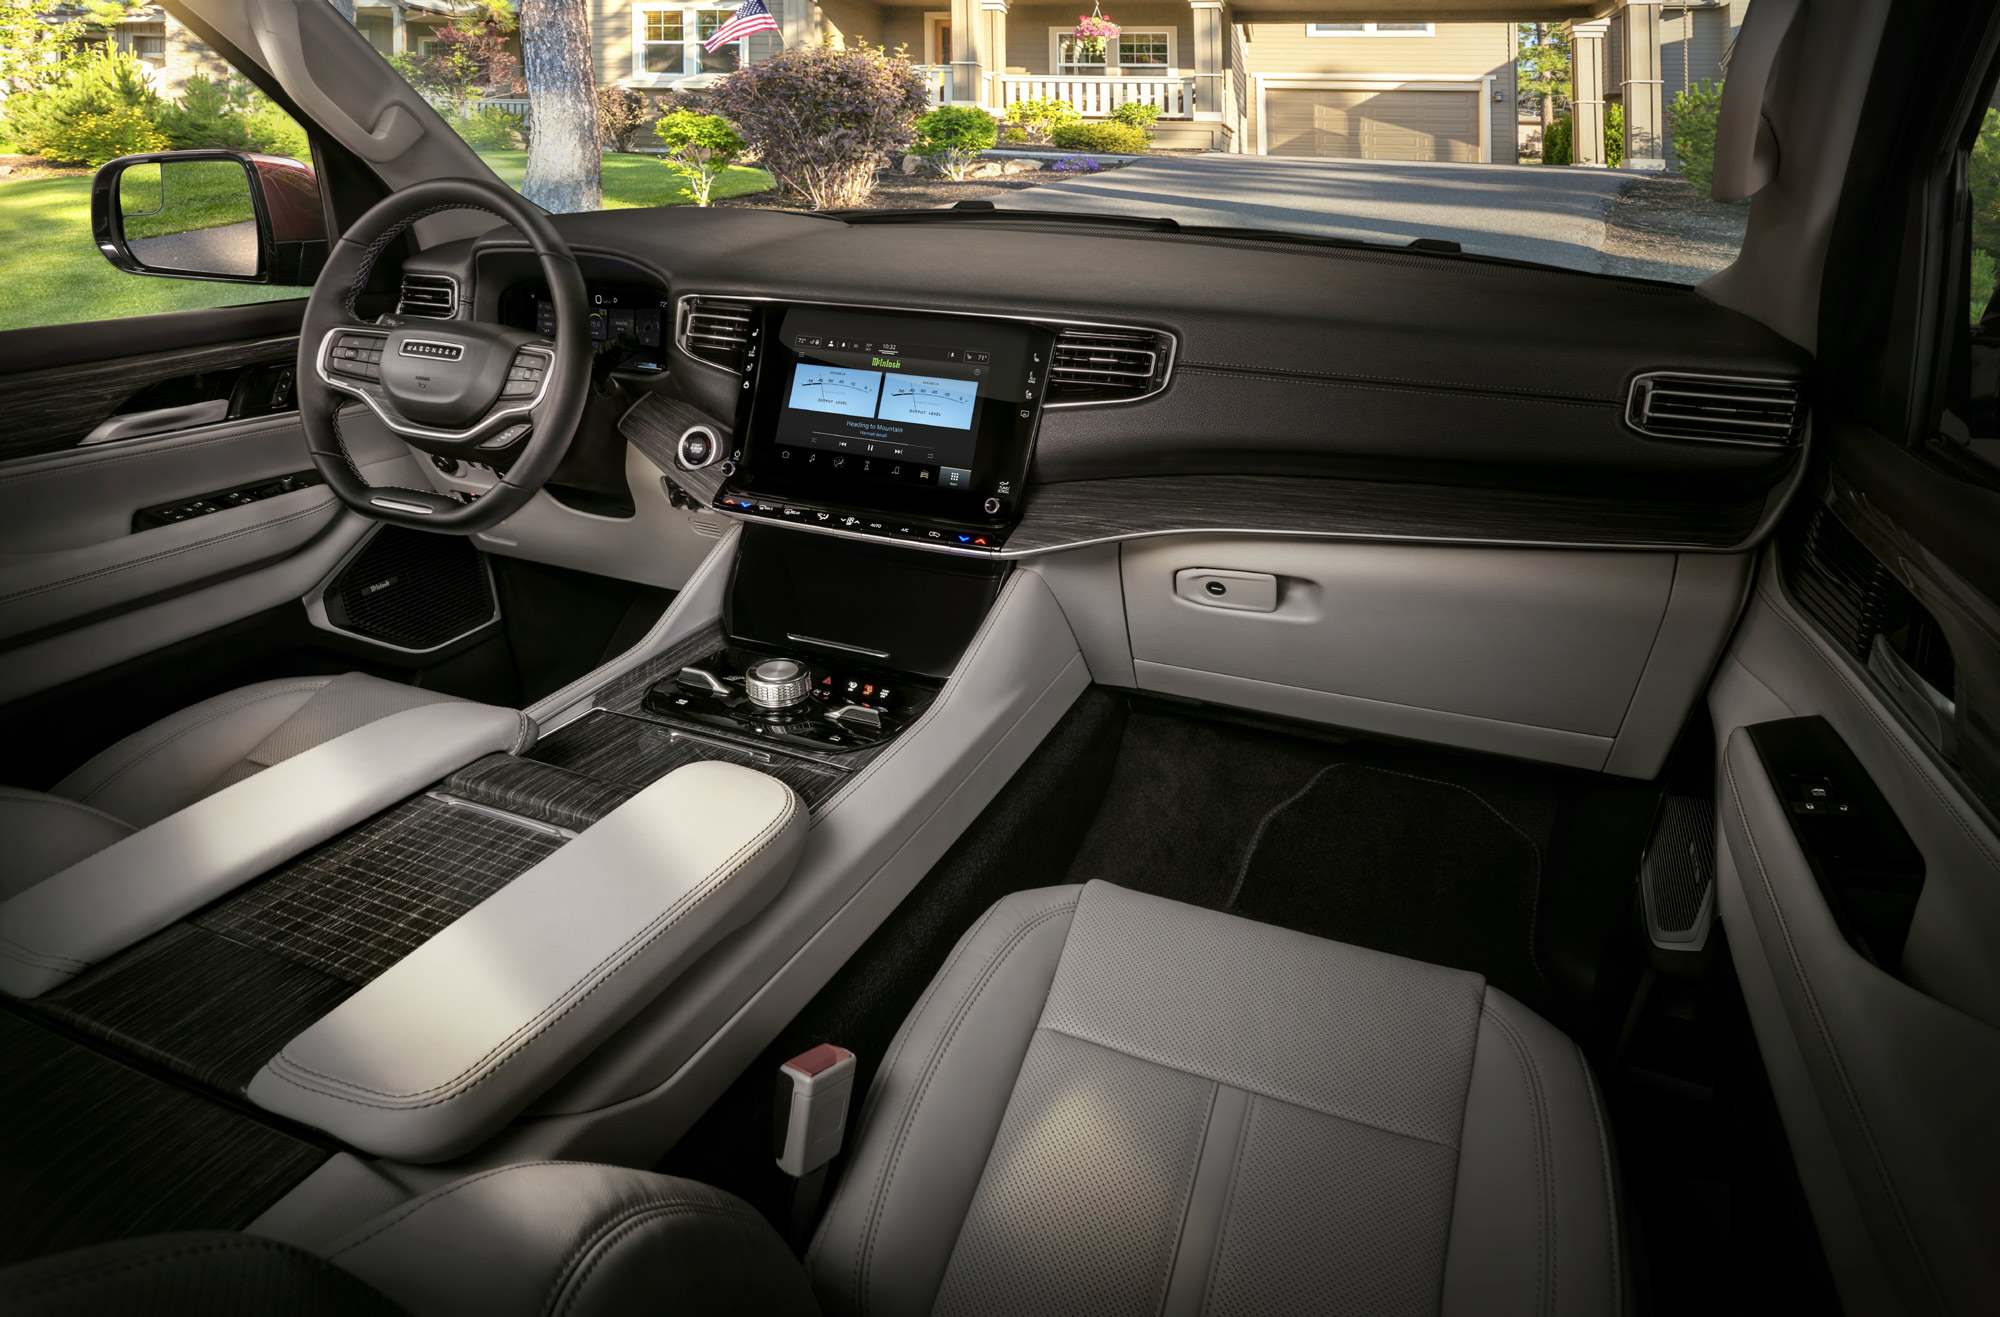 2023 Jeep Wagoneer interior and dashboard